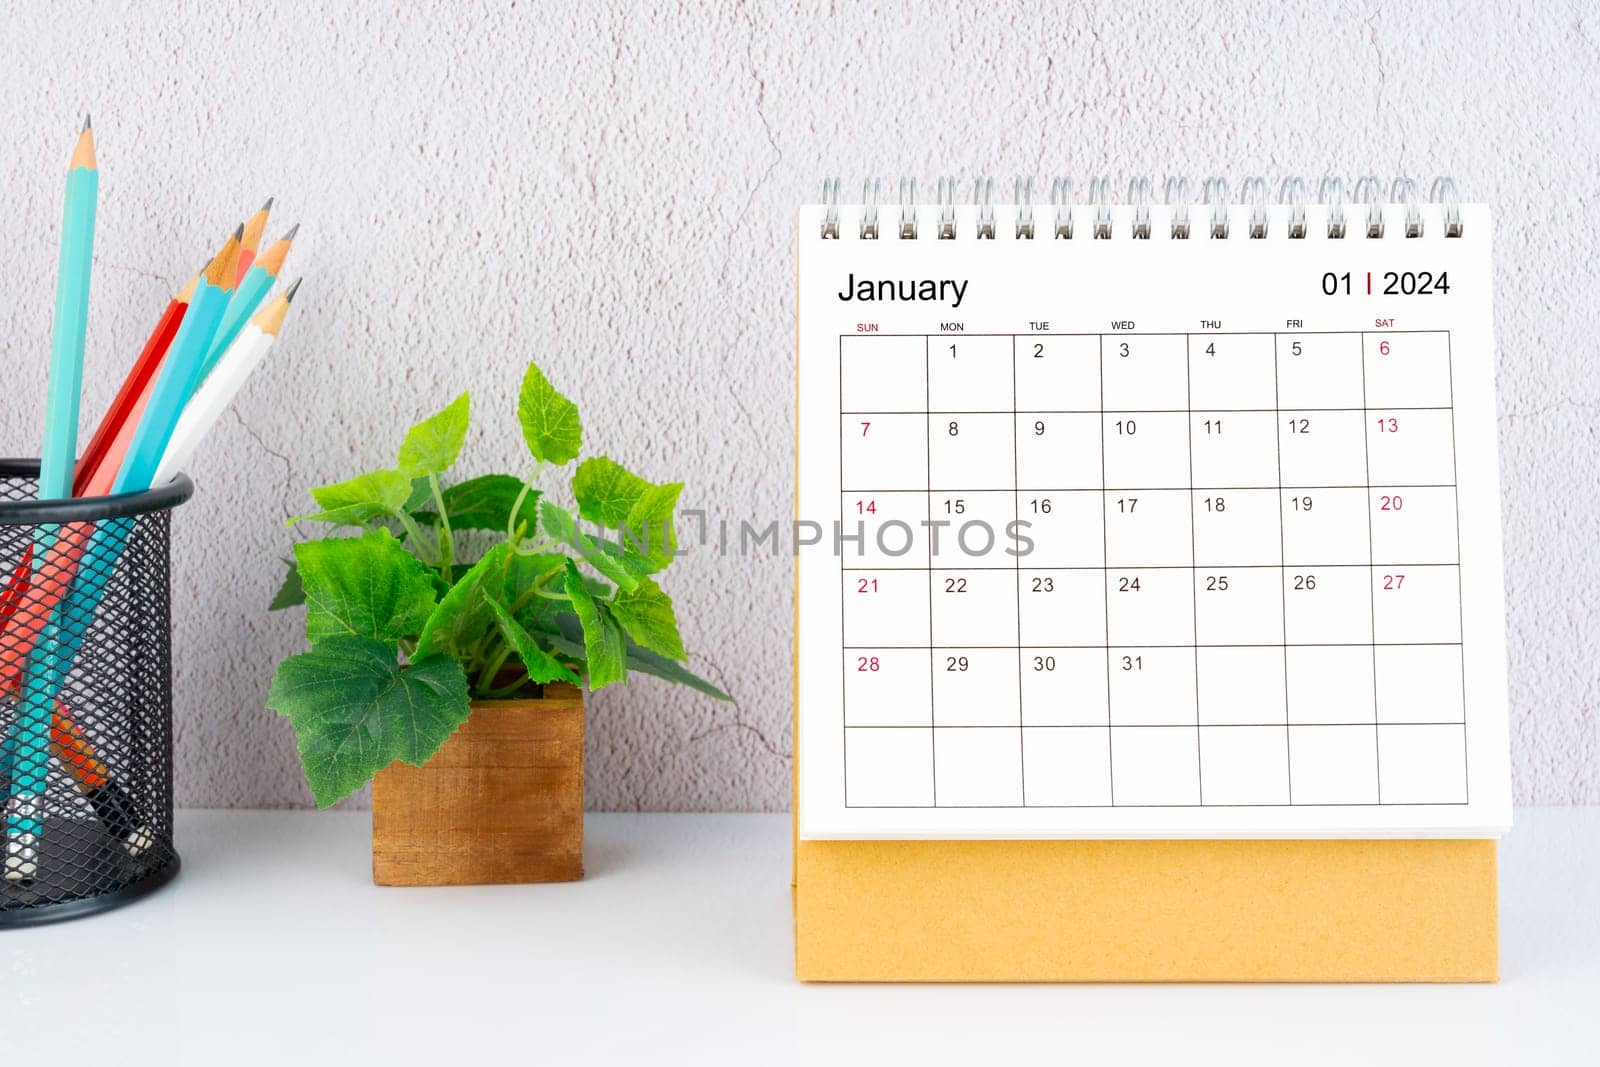 January 2024 Desk Calendar with pencil. by Gamjai